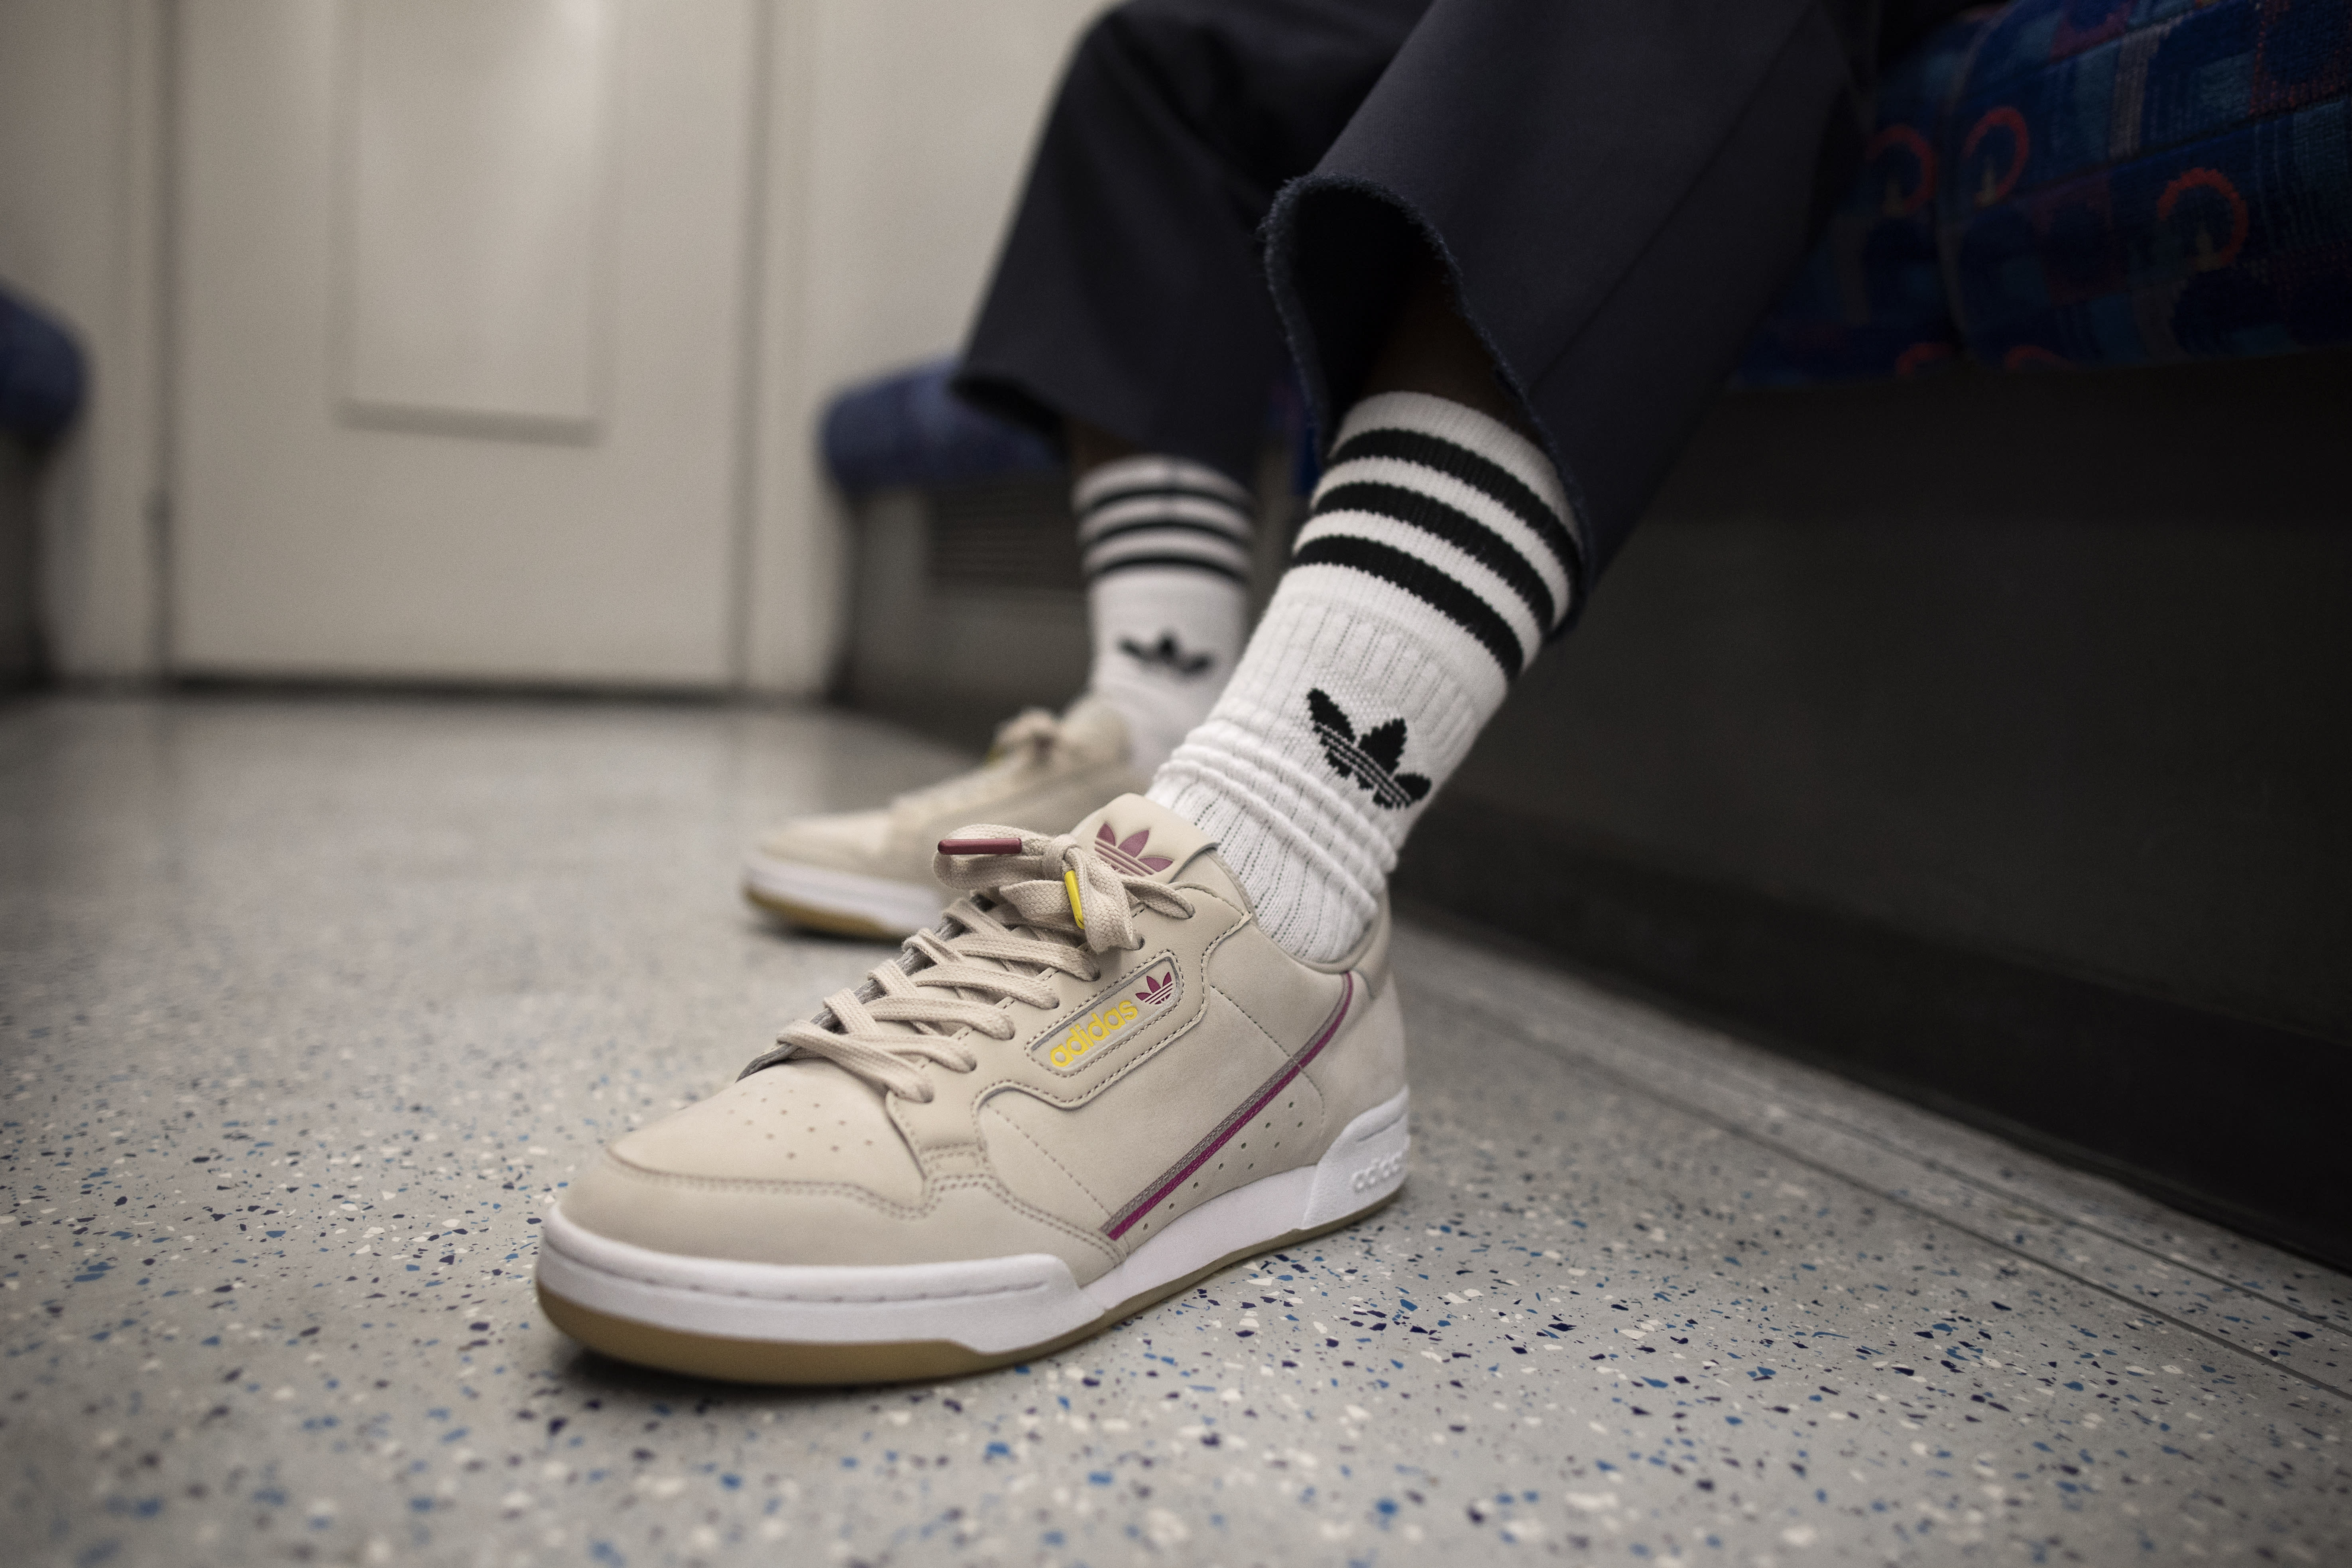 adidas Originals TfL Release New Celebrating London Underground | Complex